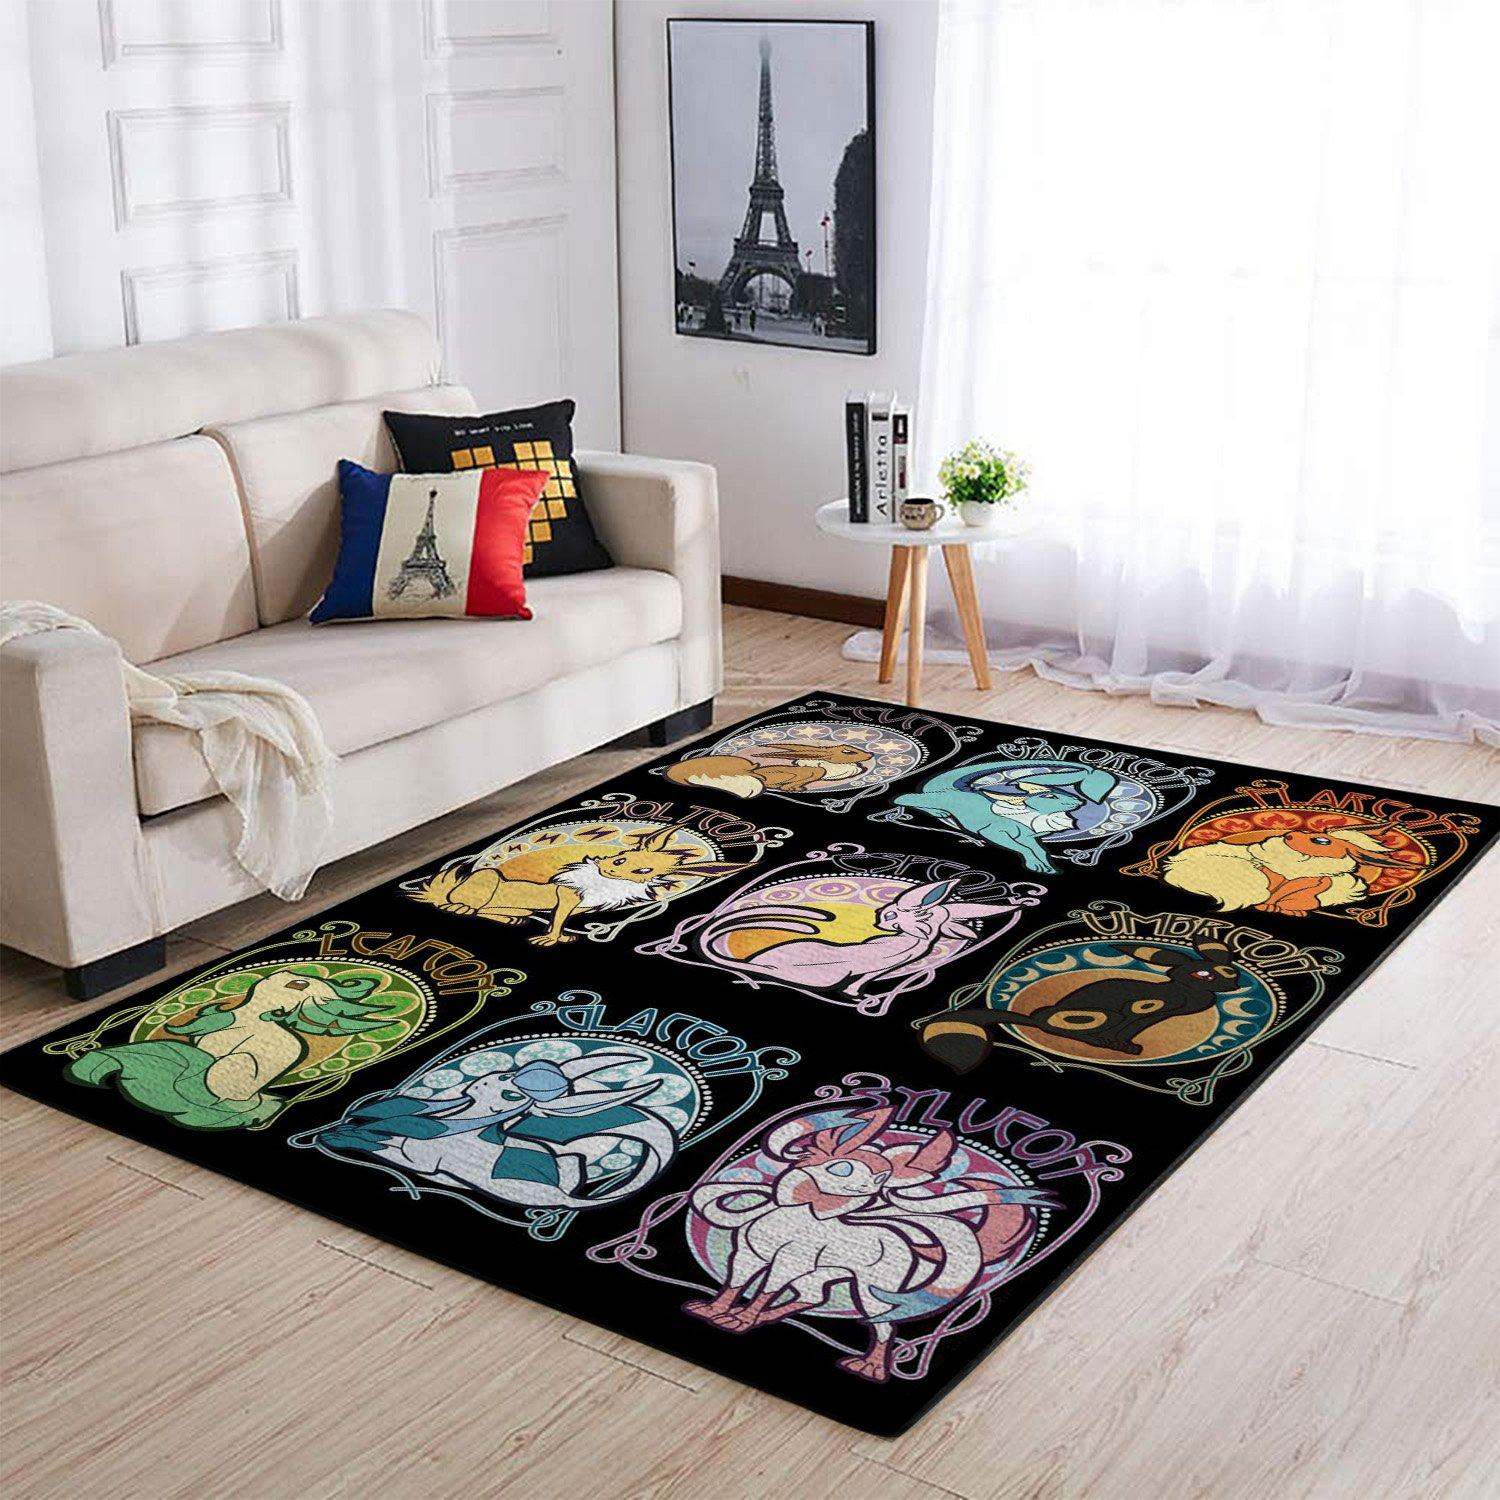 Eveelutio Area Rugs Pokemon Movies Living Room Carpet FN181232 Local Brands Floor Decor